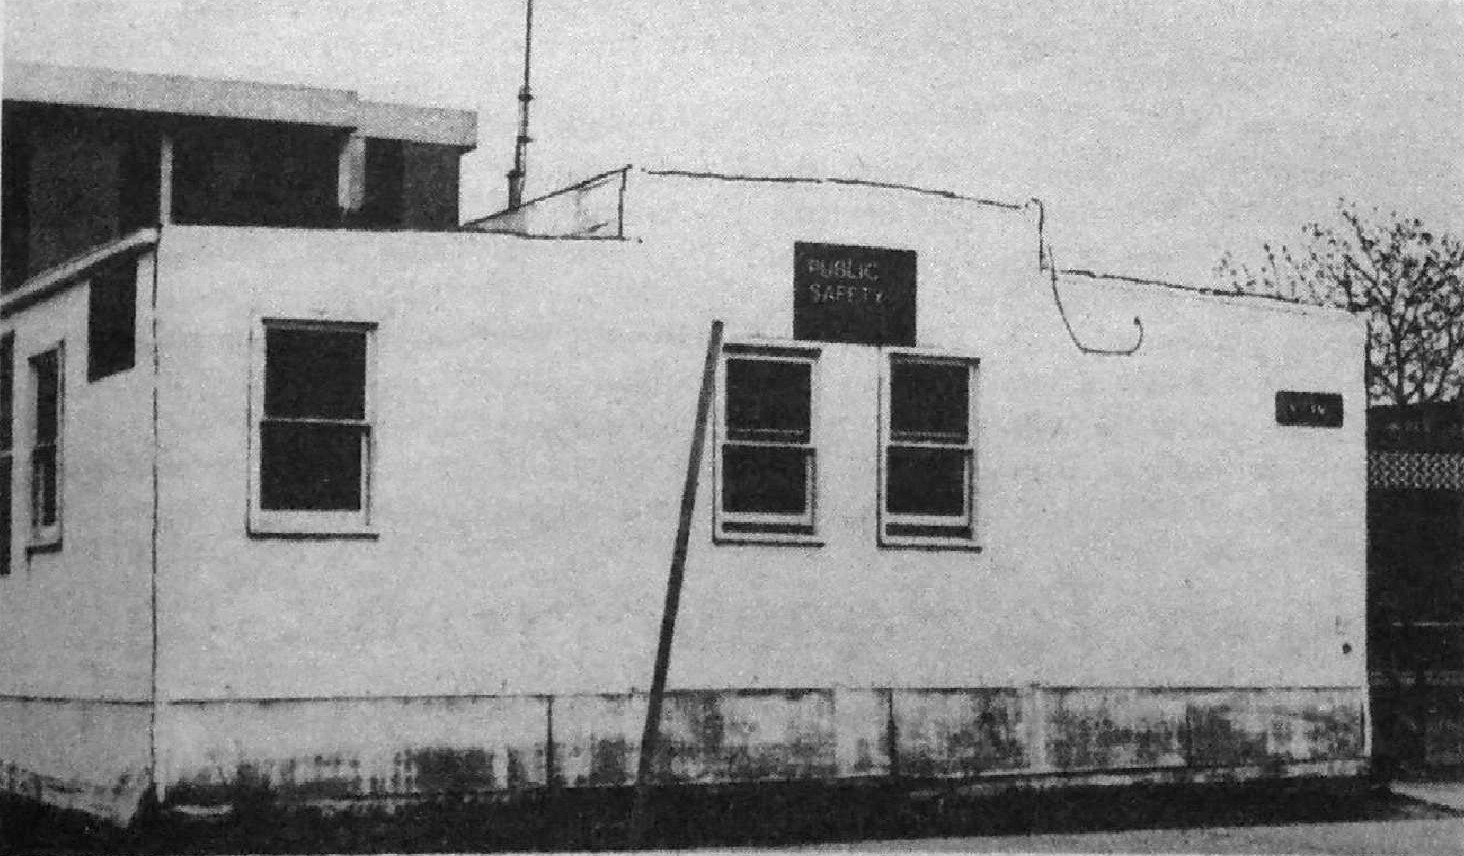 Police Station, Circa 1981